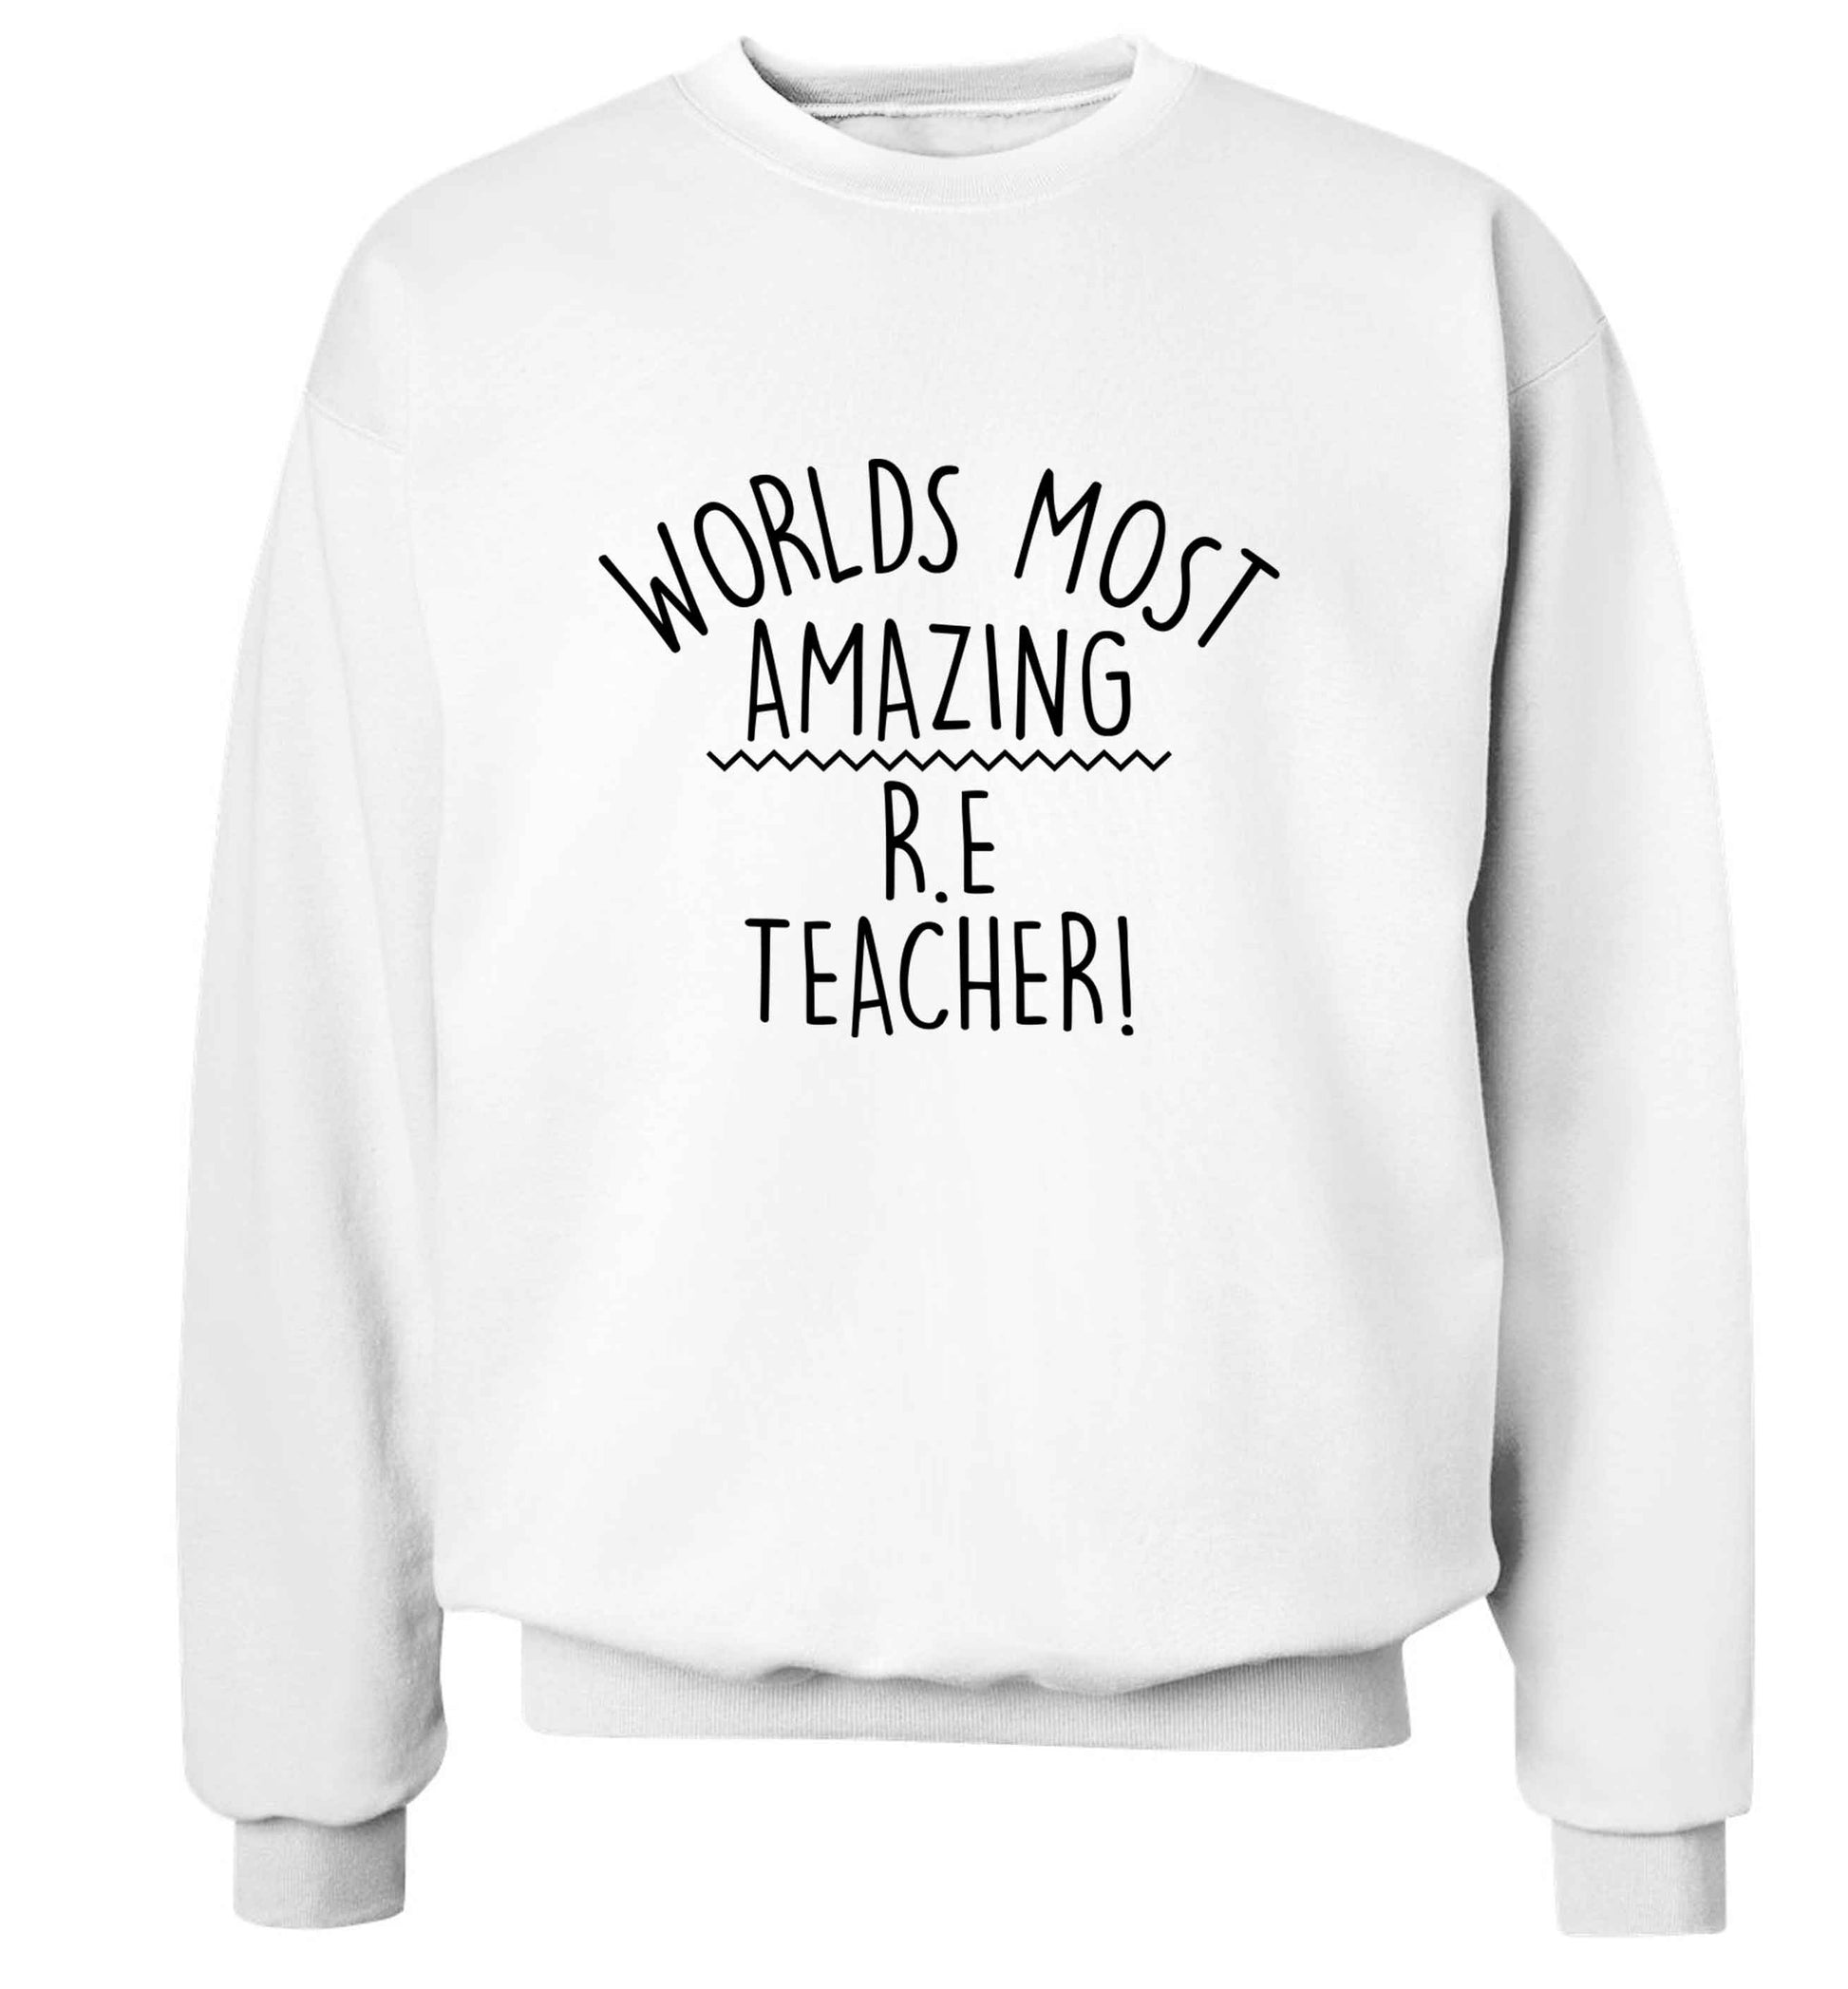 Worlds most amazing R.E teacher adult's unisex white sweater 2XL